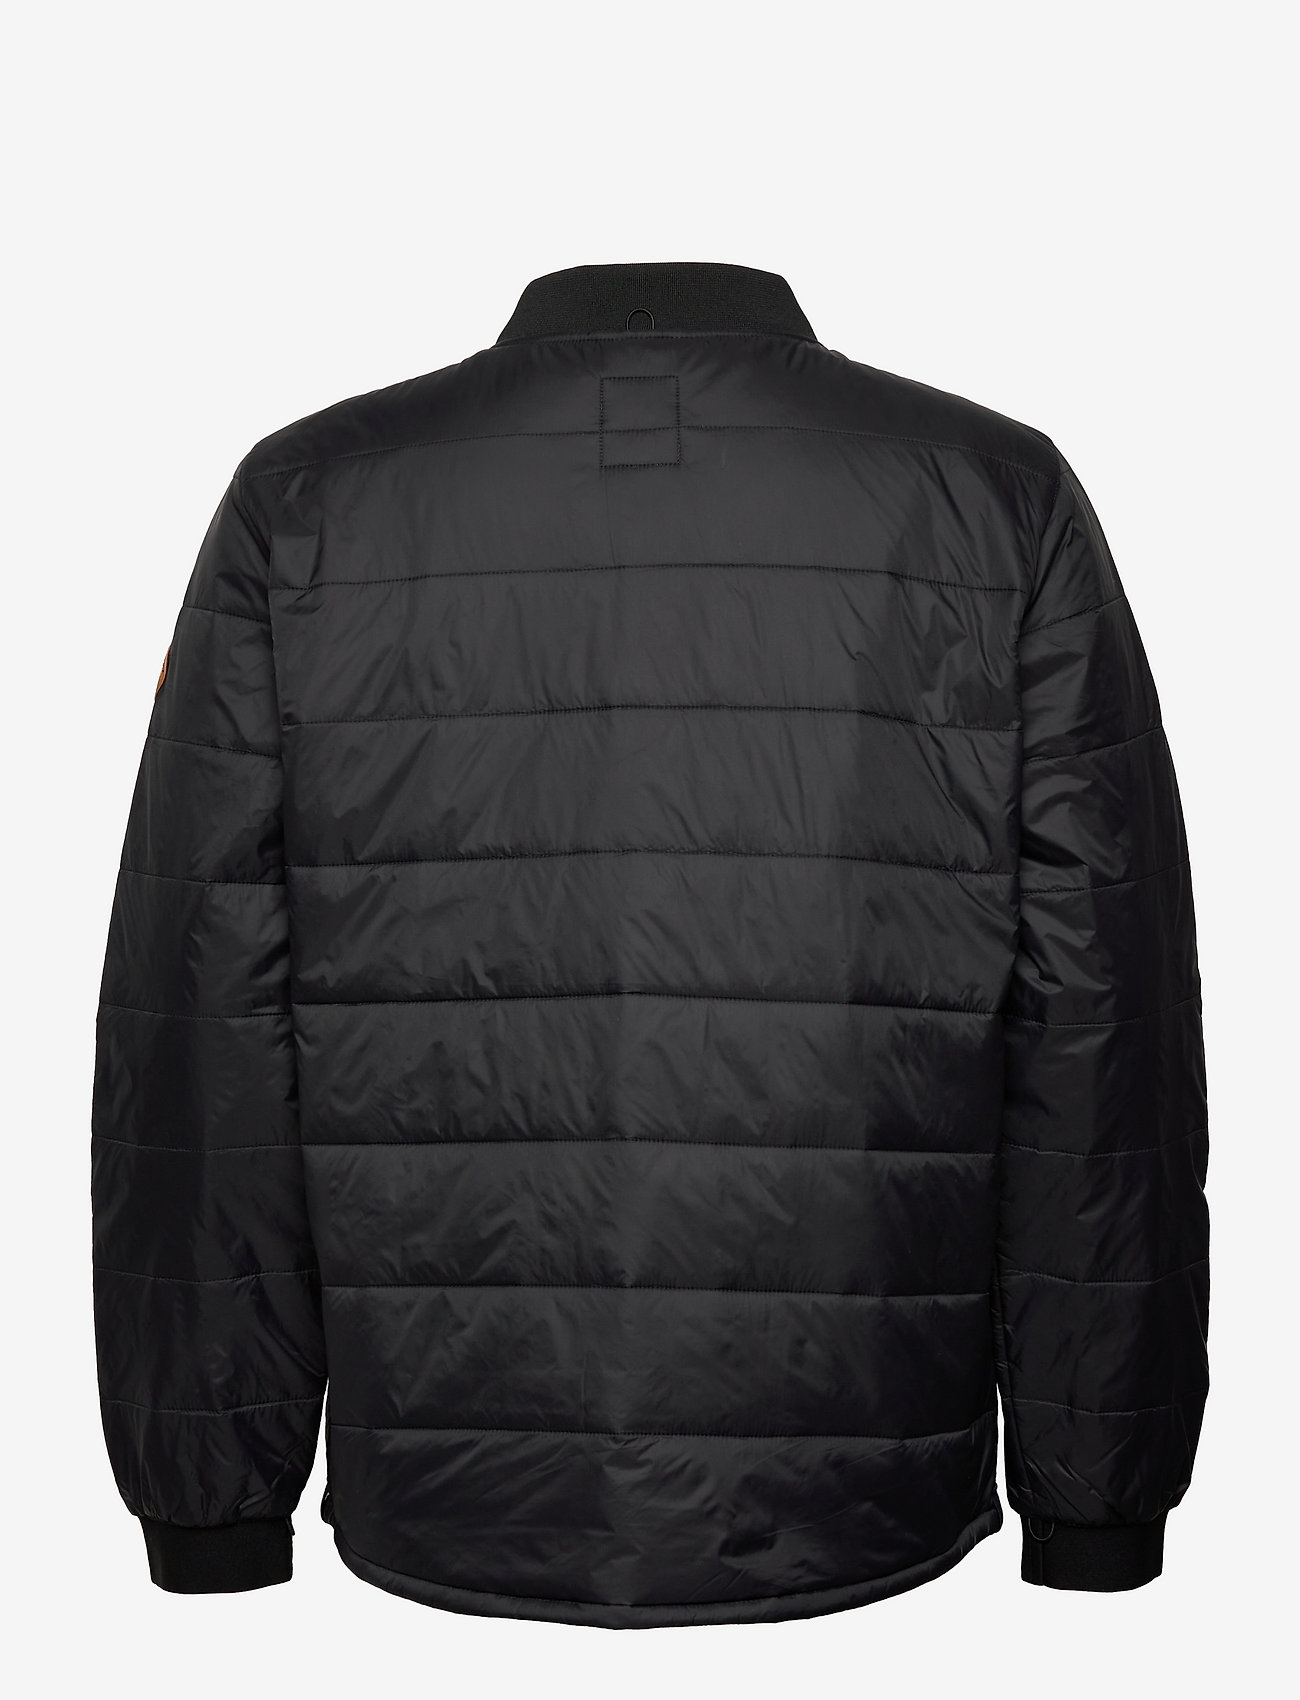 Timberland - CLS Bomber inner - spring jackets - black - 1